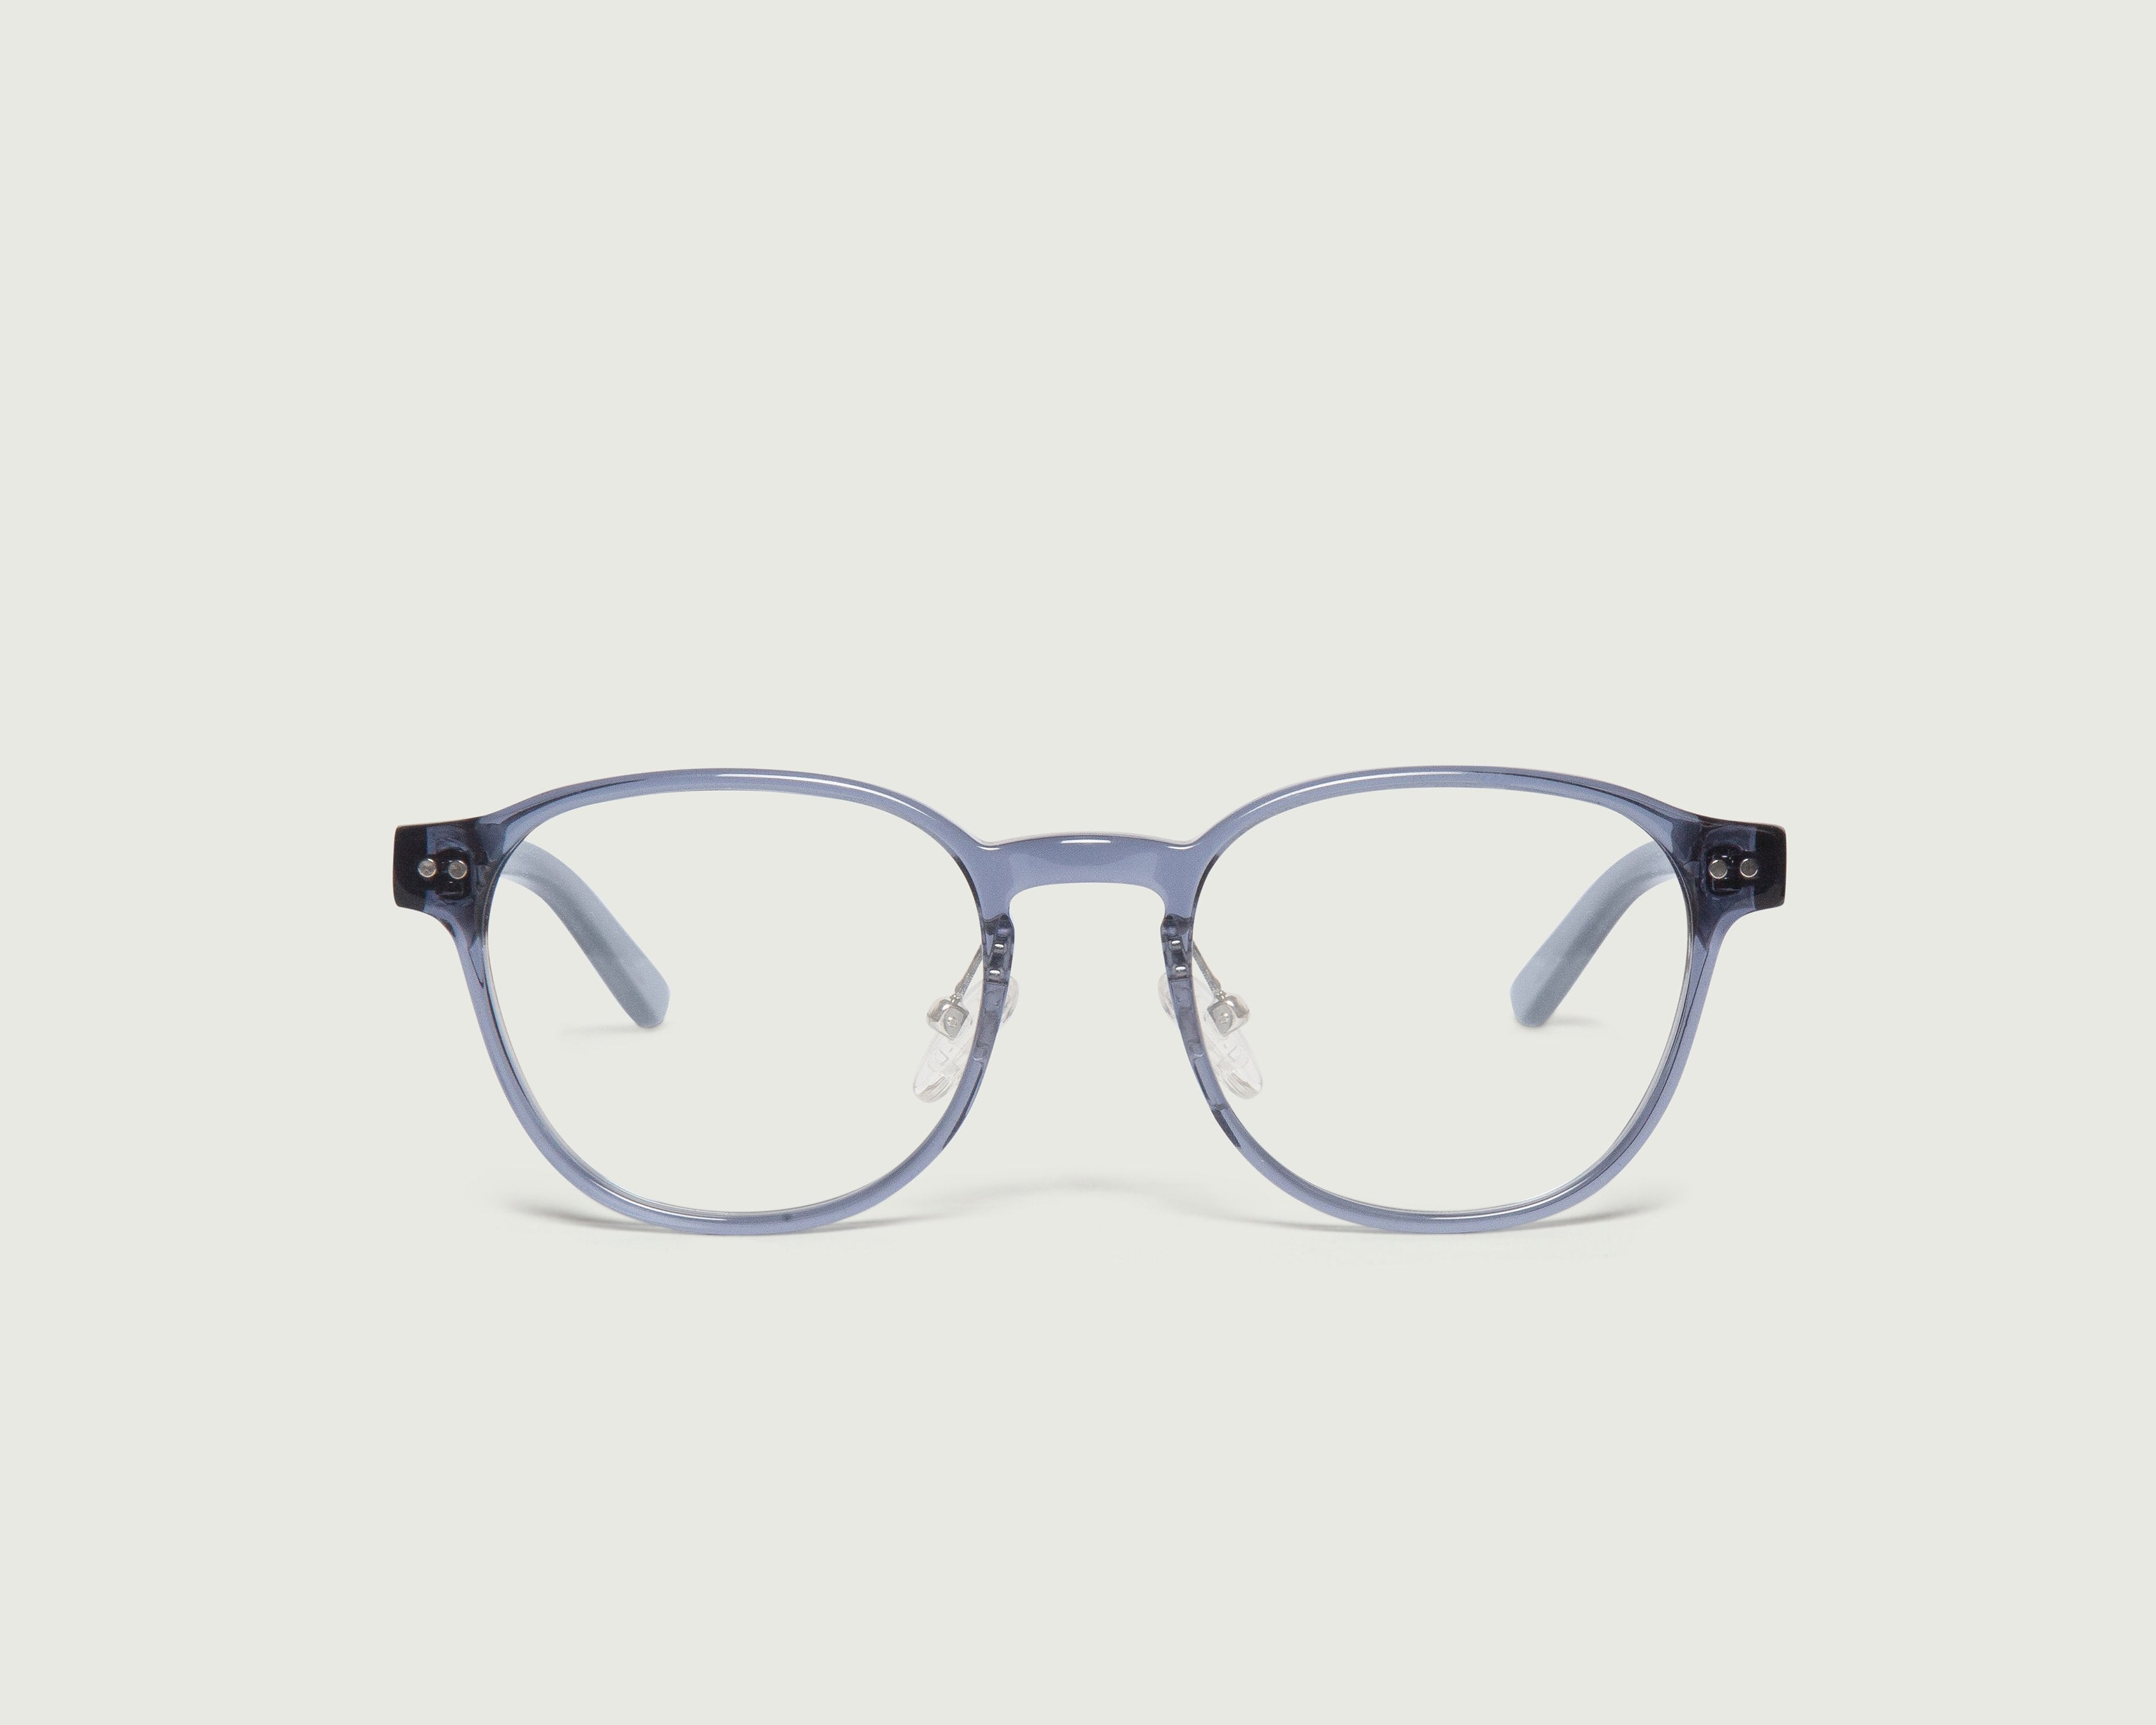 Denim::Orman Eyeglasses round blue acetate front